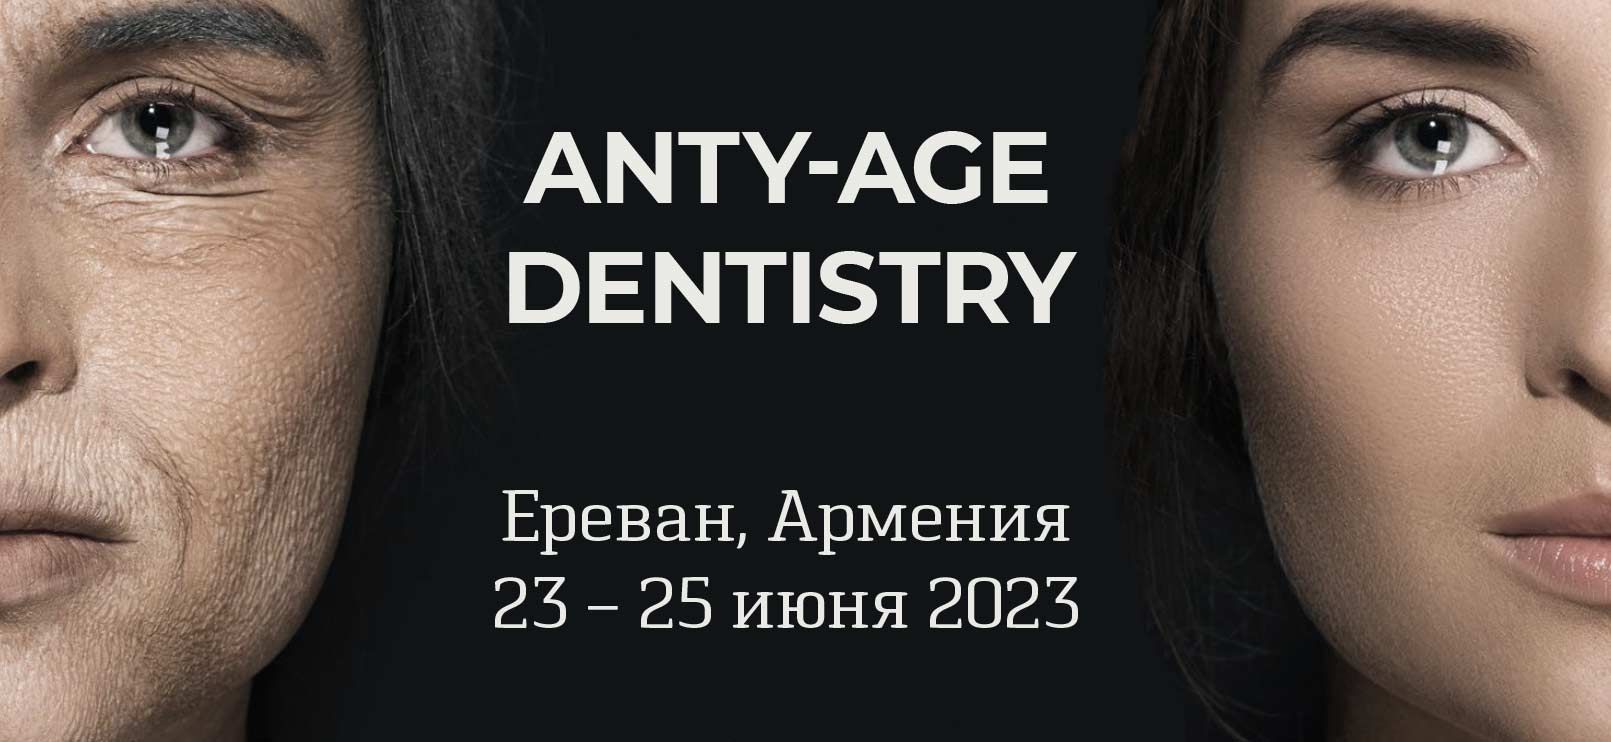 anty-age-dentistry-kongress-2023